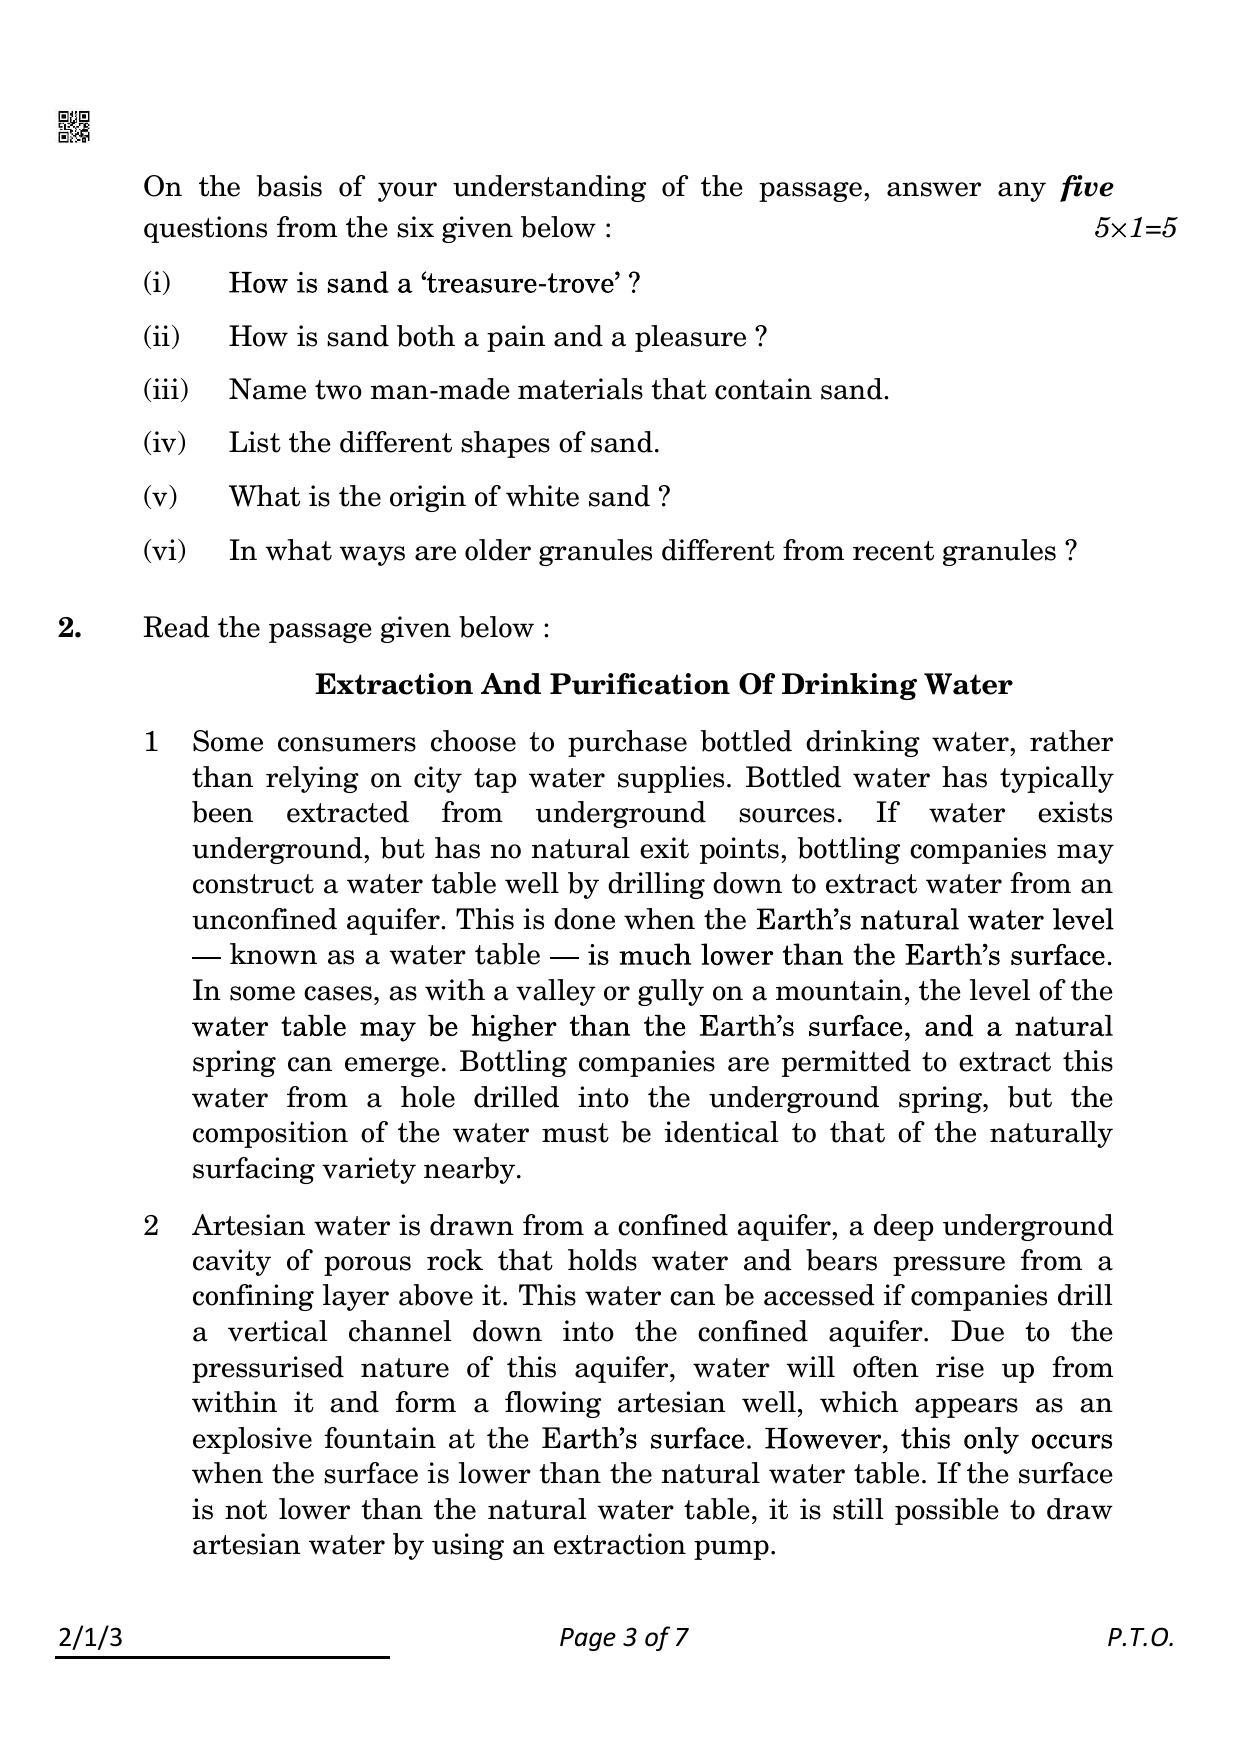 CBSE Class 10 2-1-3 English L & L 2022 Question Paper - Page 3